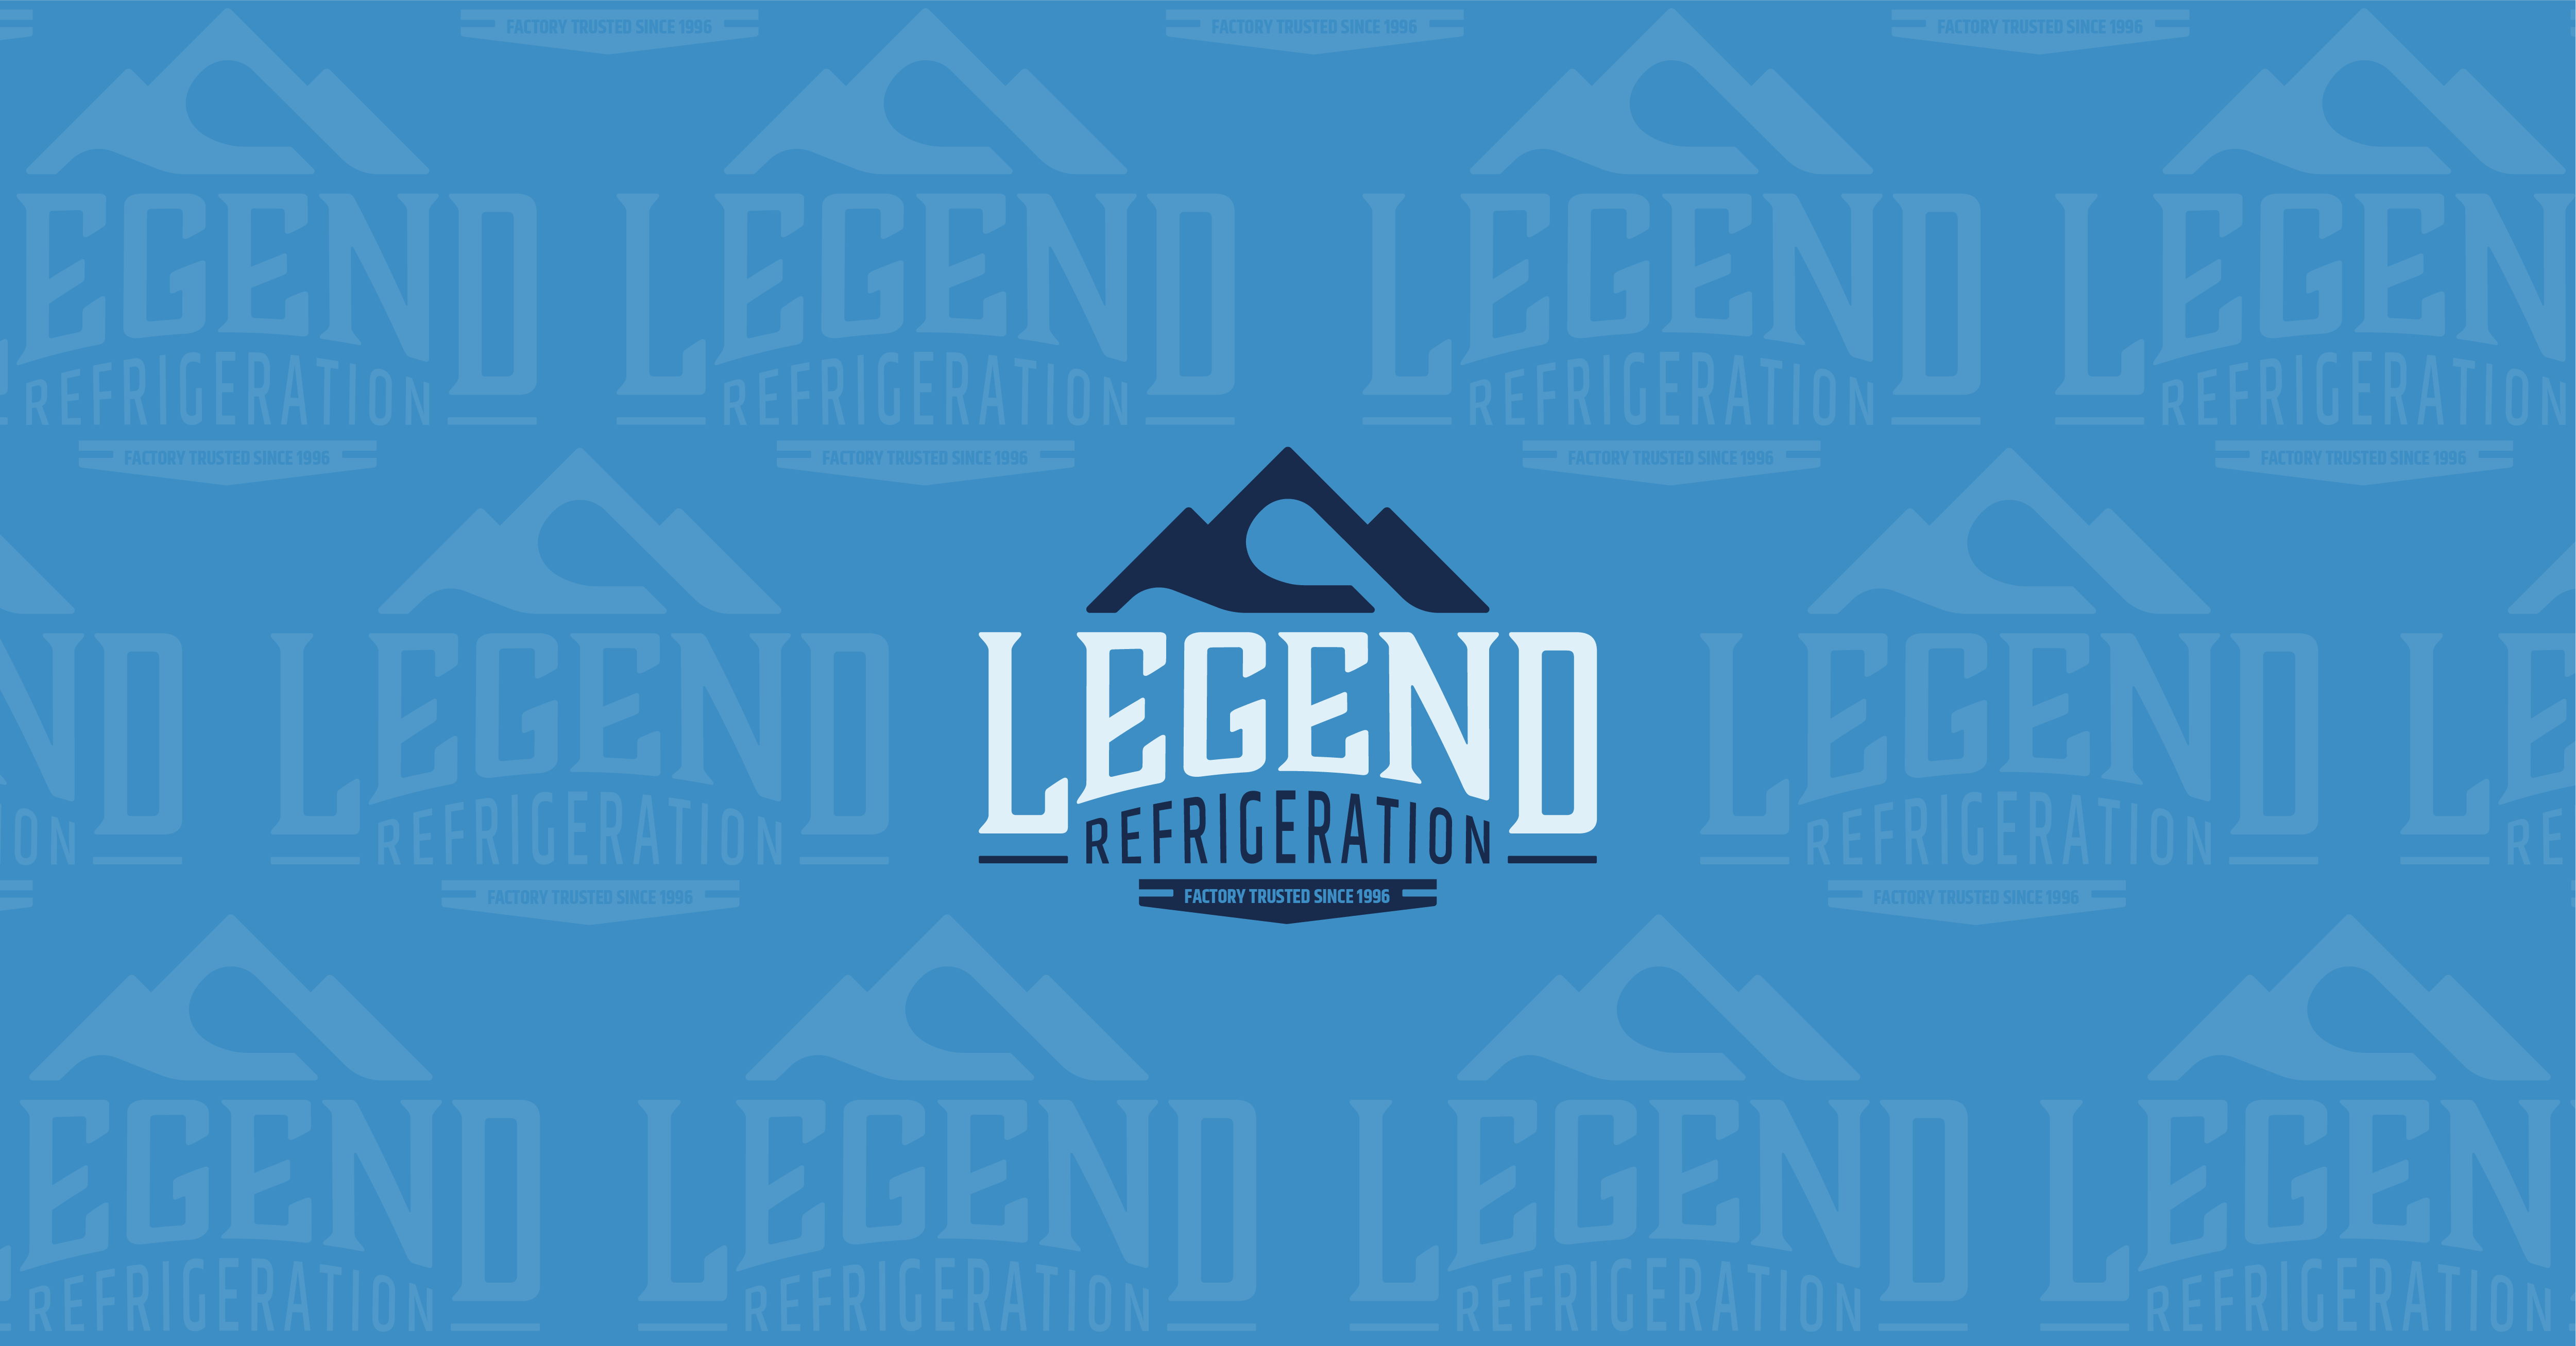 Legend Refrigeration thumbmail